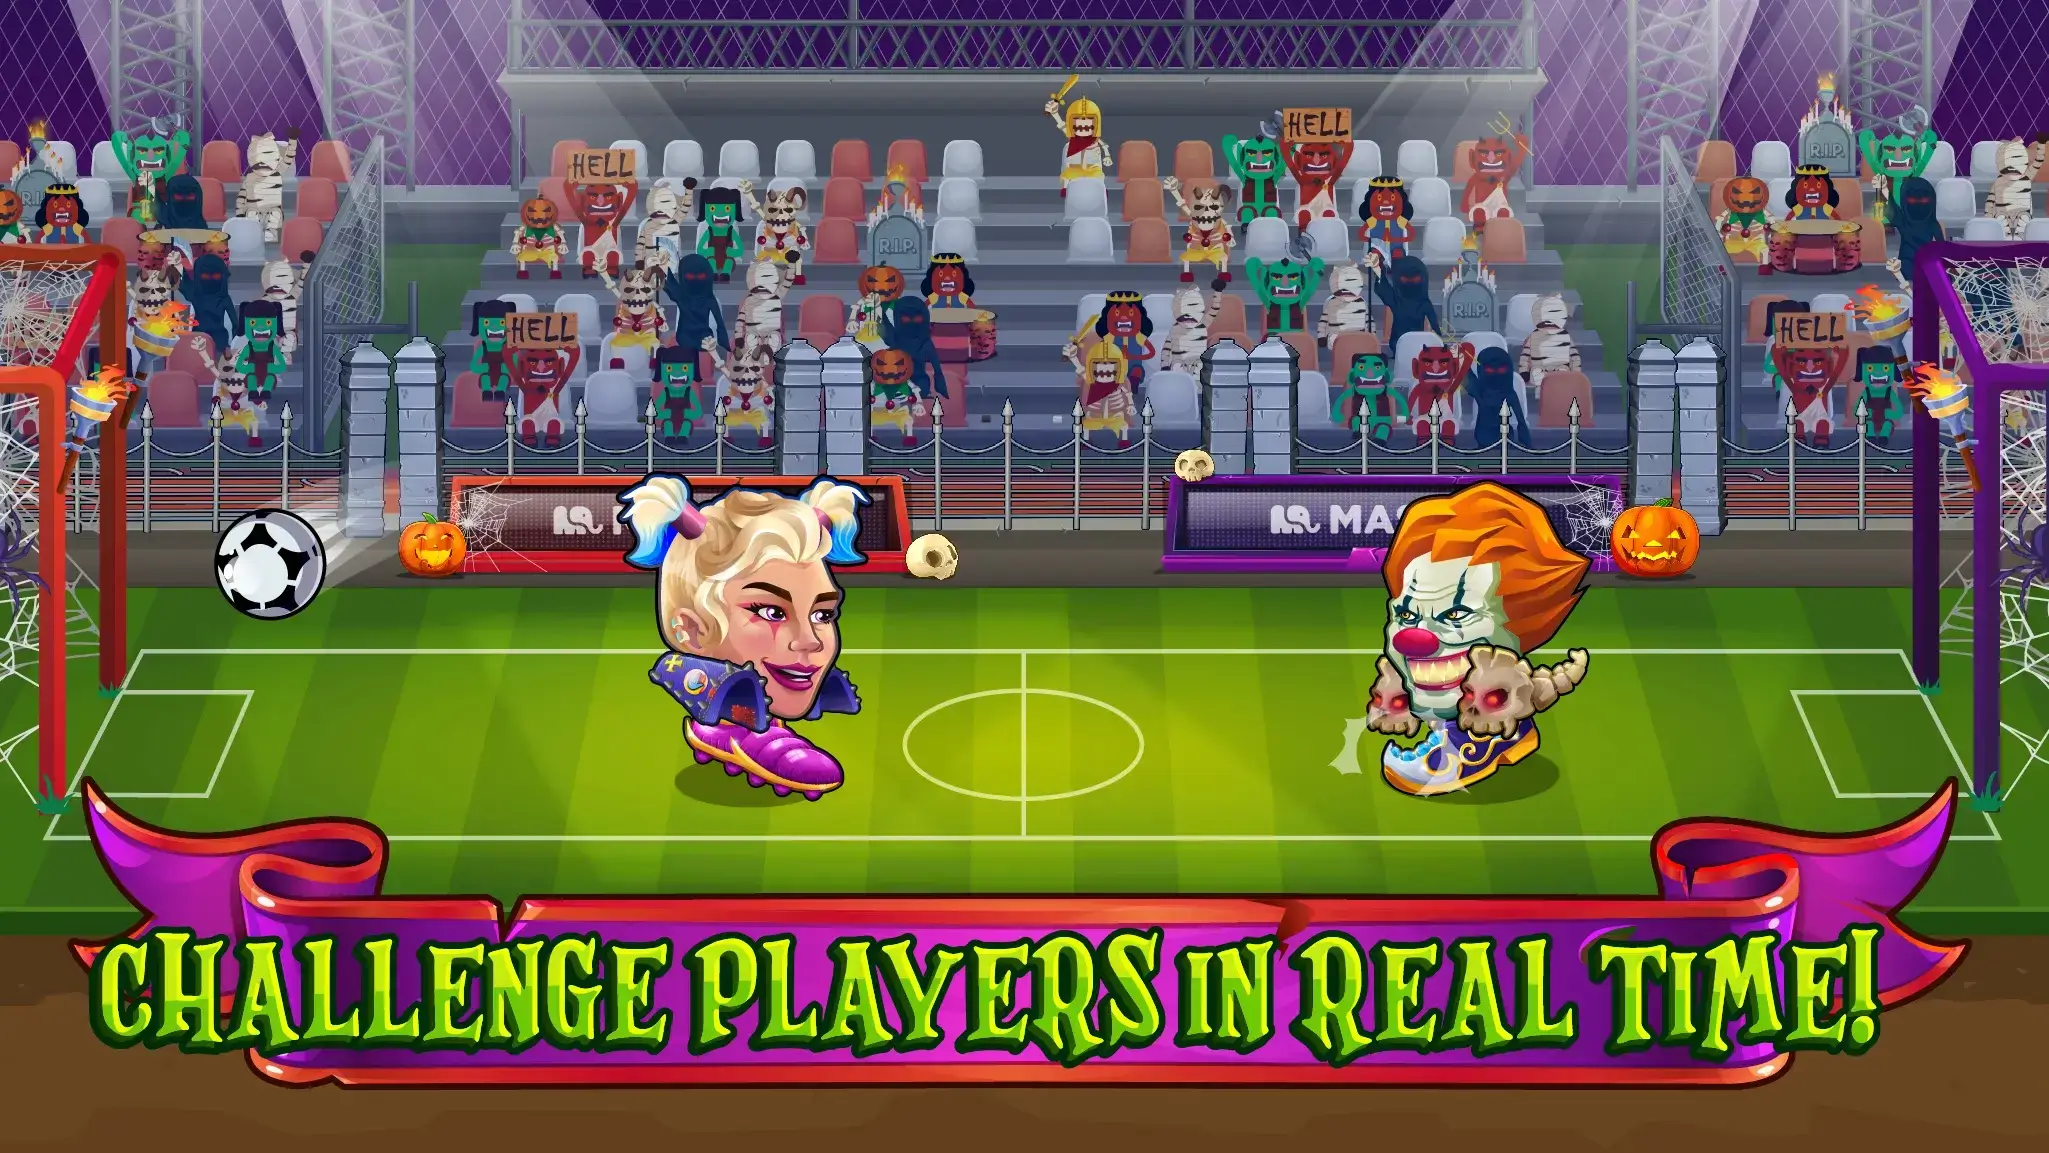 Head Ball 2 - Futebol Online – Apps no Google Play